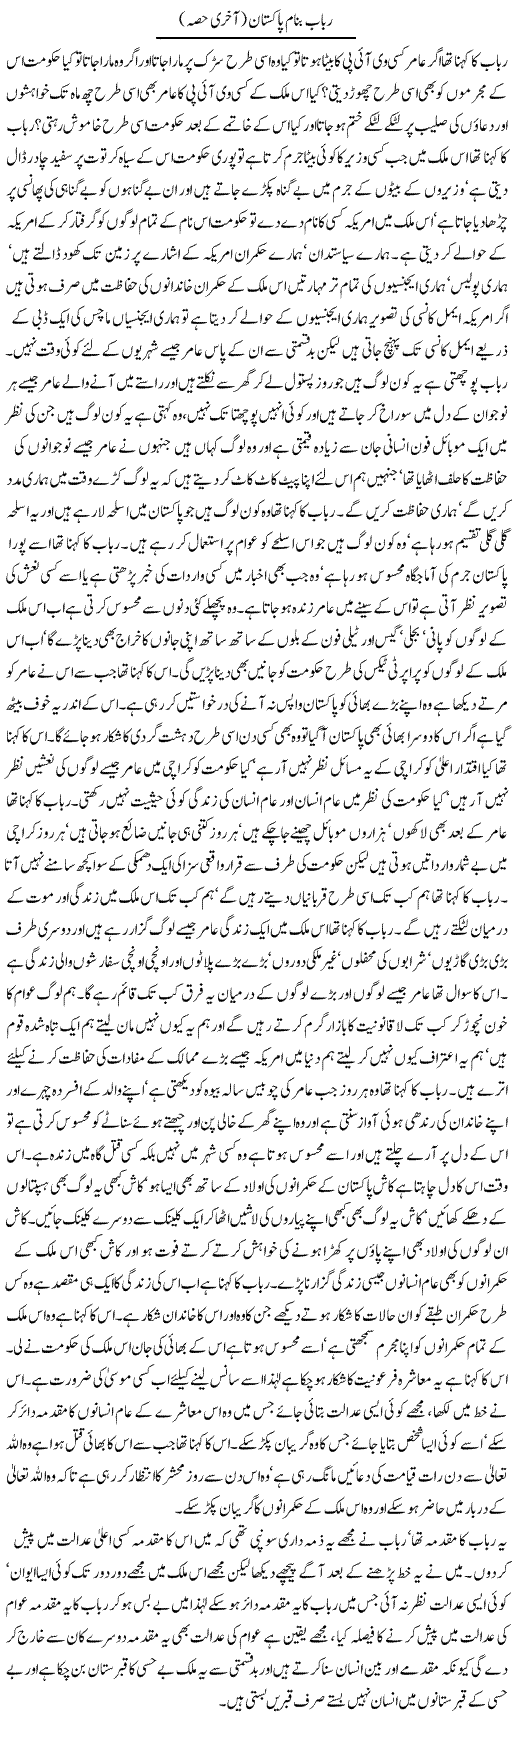 Rabab banam Pakistan last Part by Javed Chaudhry